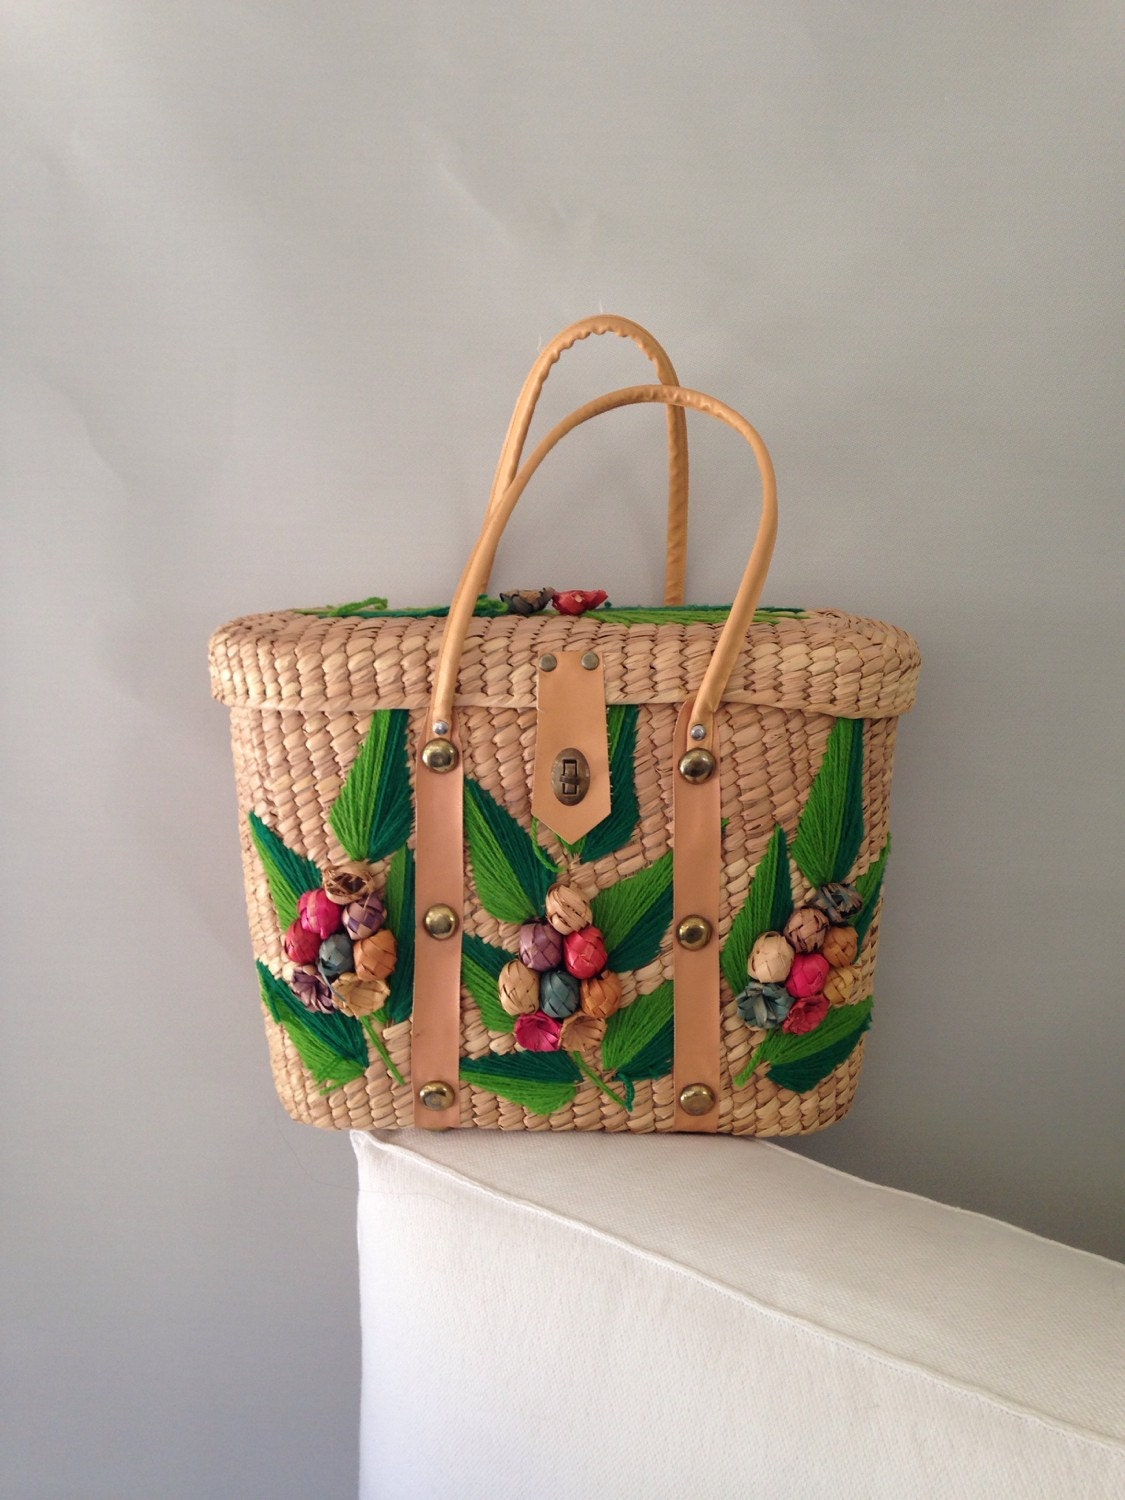 Vintage Straw Handbag Tote Beachbag Made in by MayaVintage